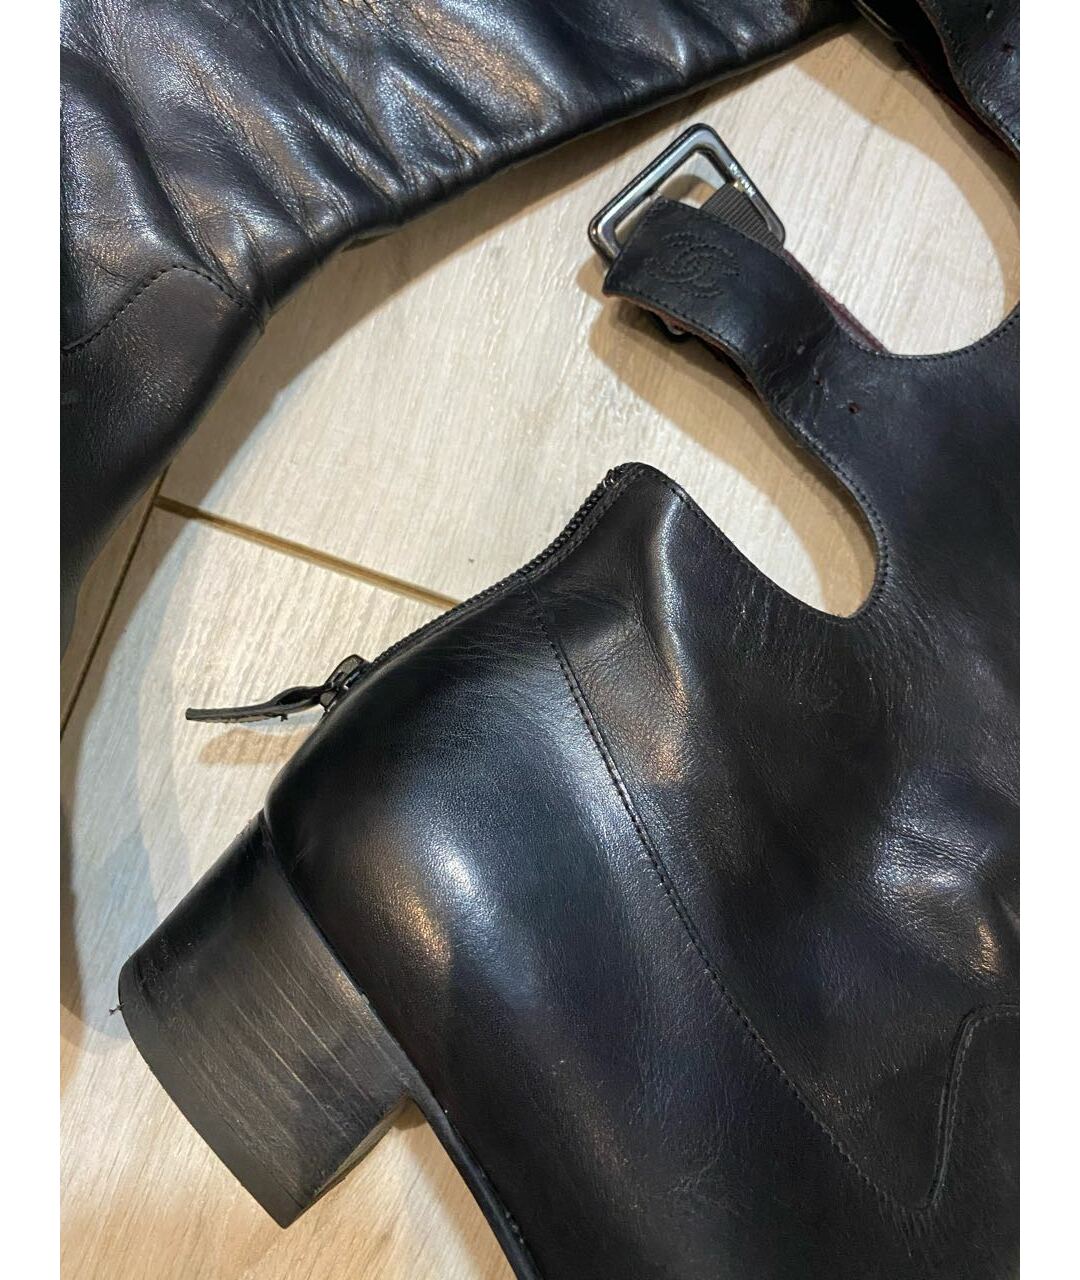 CHANEL PRE-OWNED Черные кожаные сапоги, фото 2